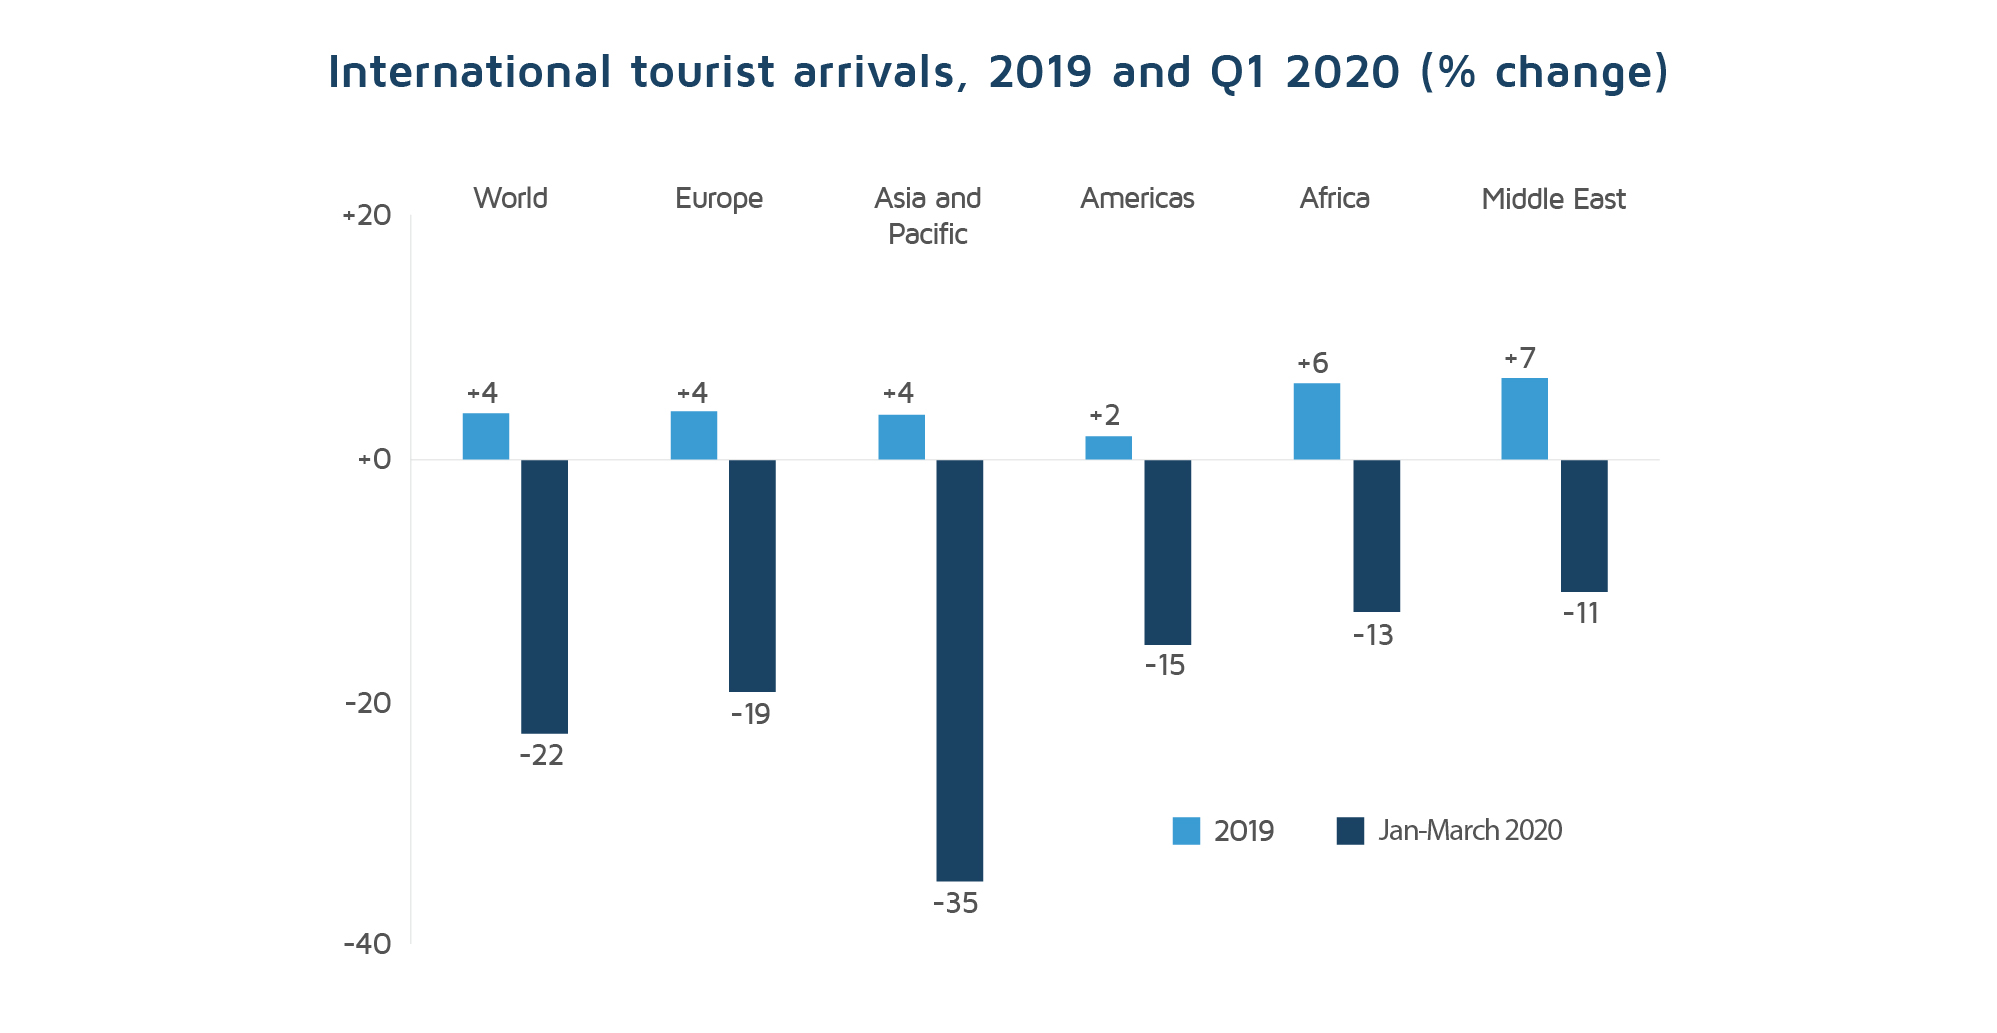 nternational-tourist-arrivals-2019-and-Q1-2020-change-UNWTO